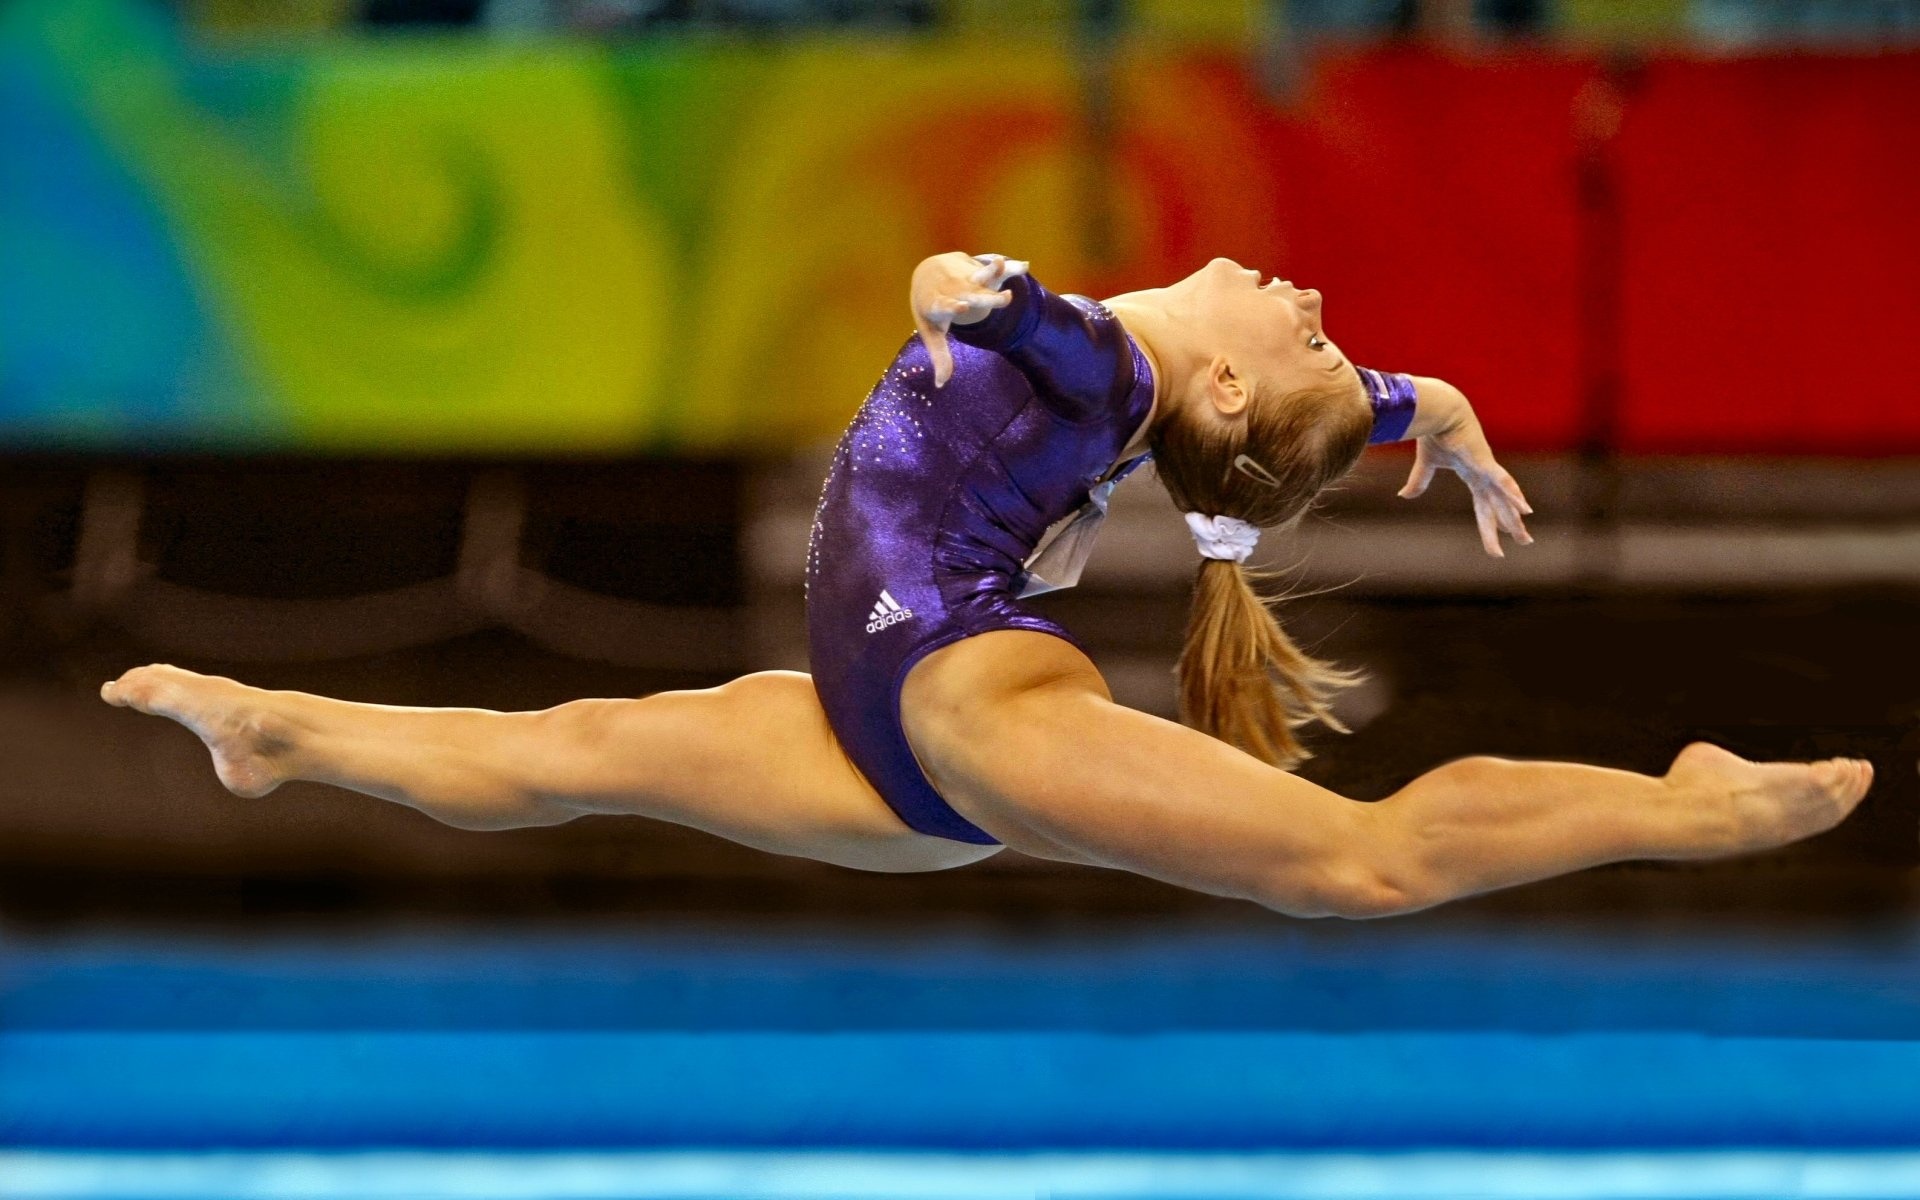 Acrobatic Sports: Gymnastics clothing, Adidas, Performance skills. 1920x1200 HD Background.